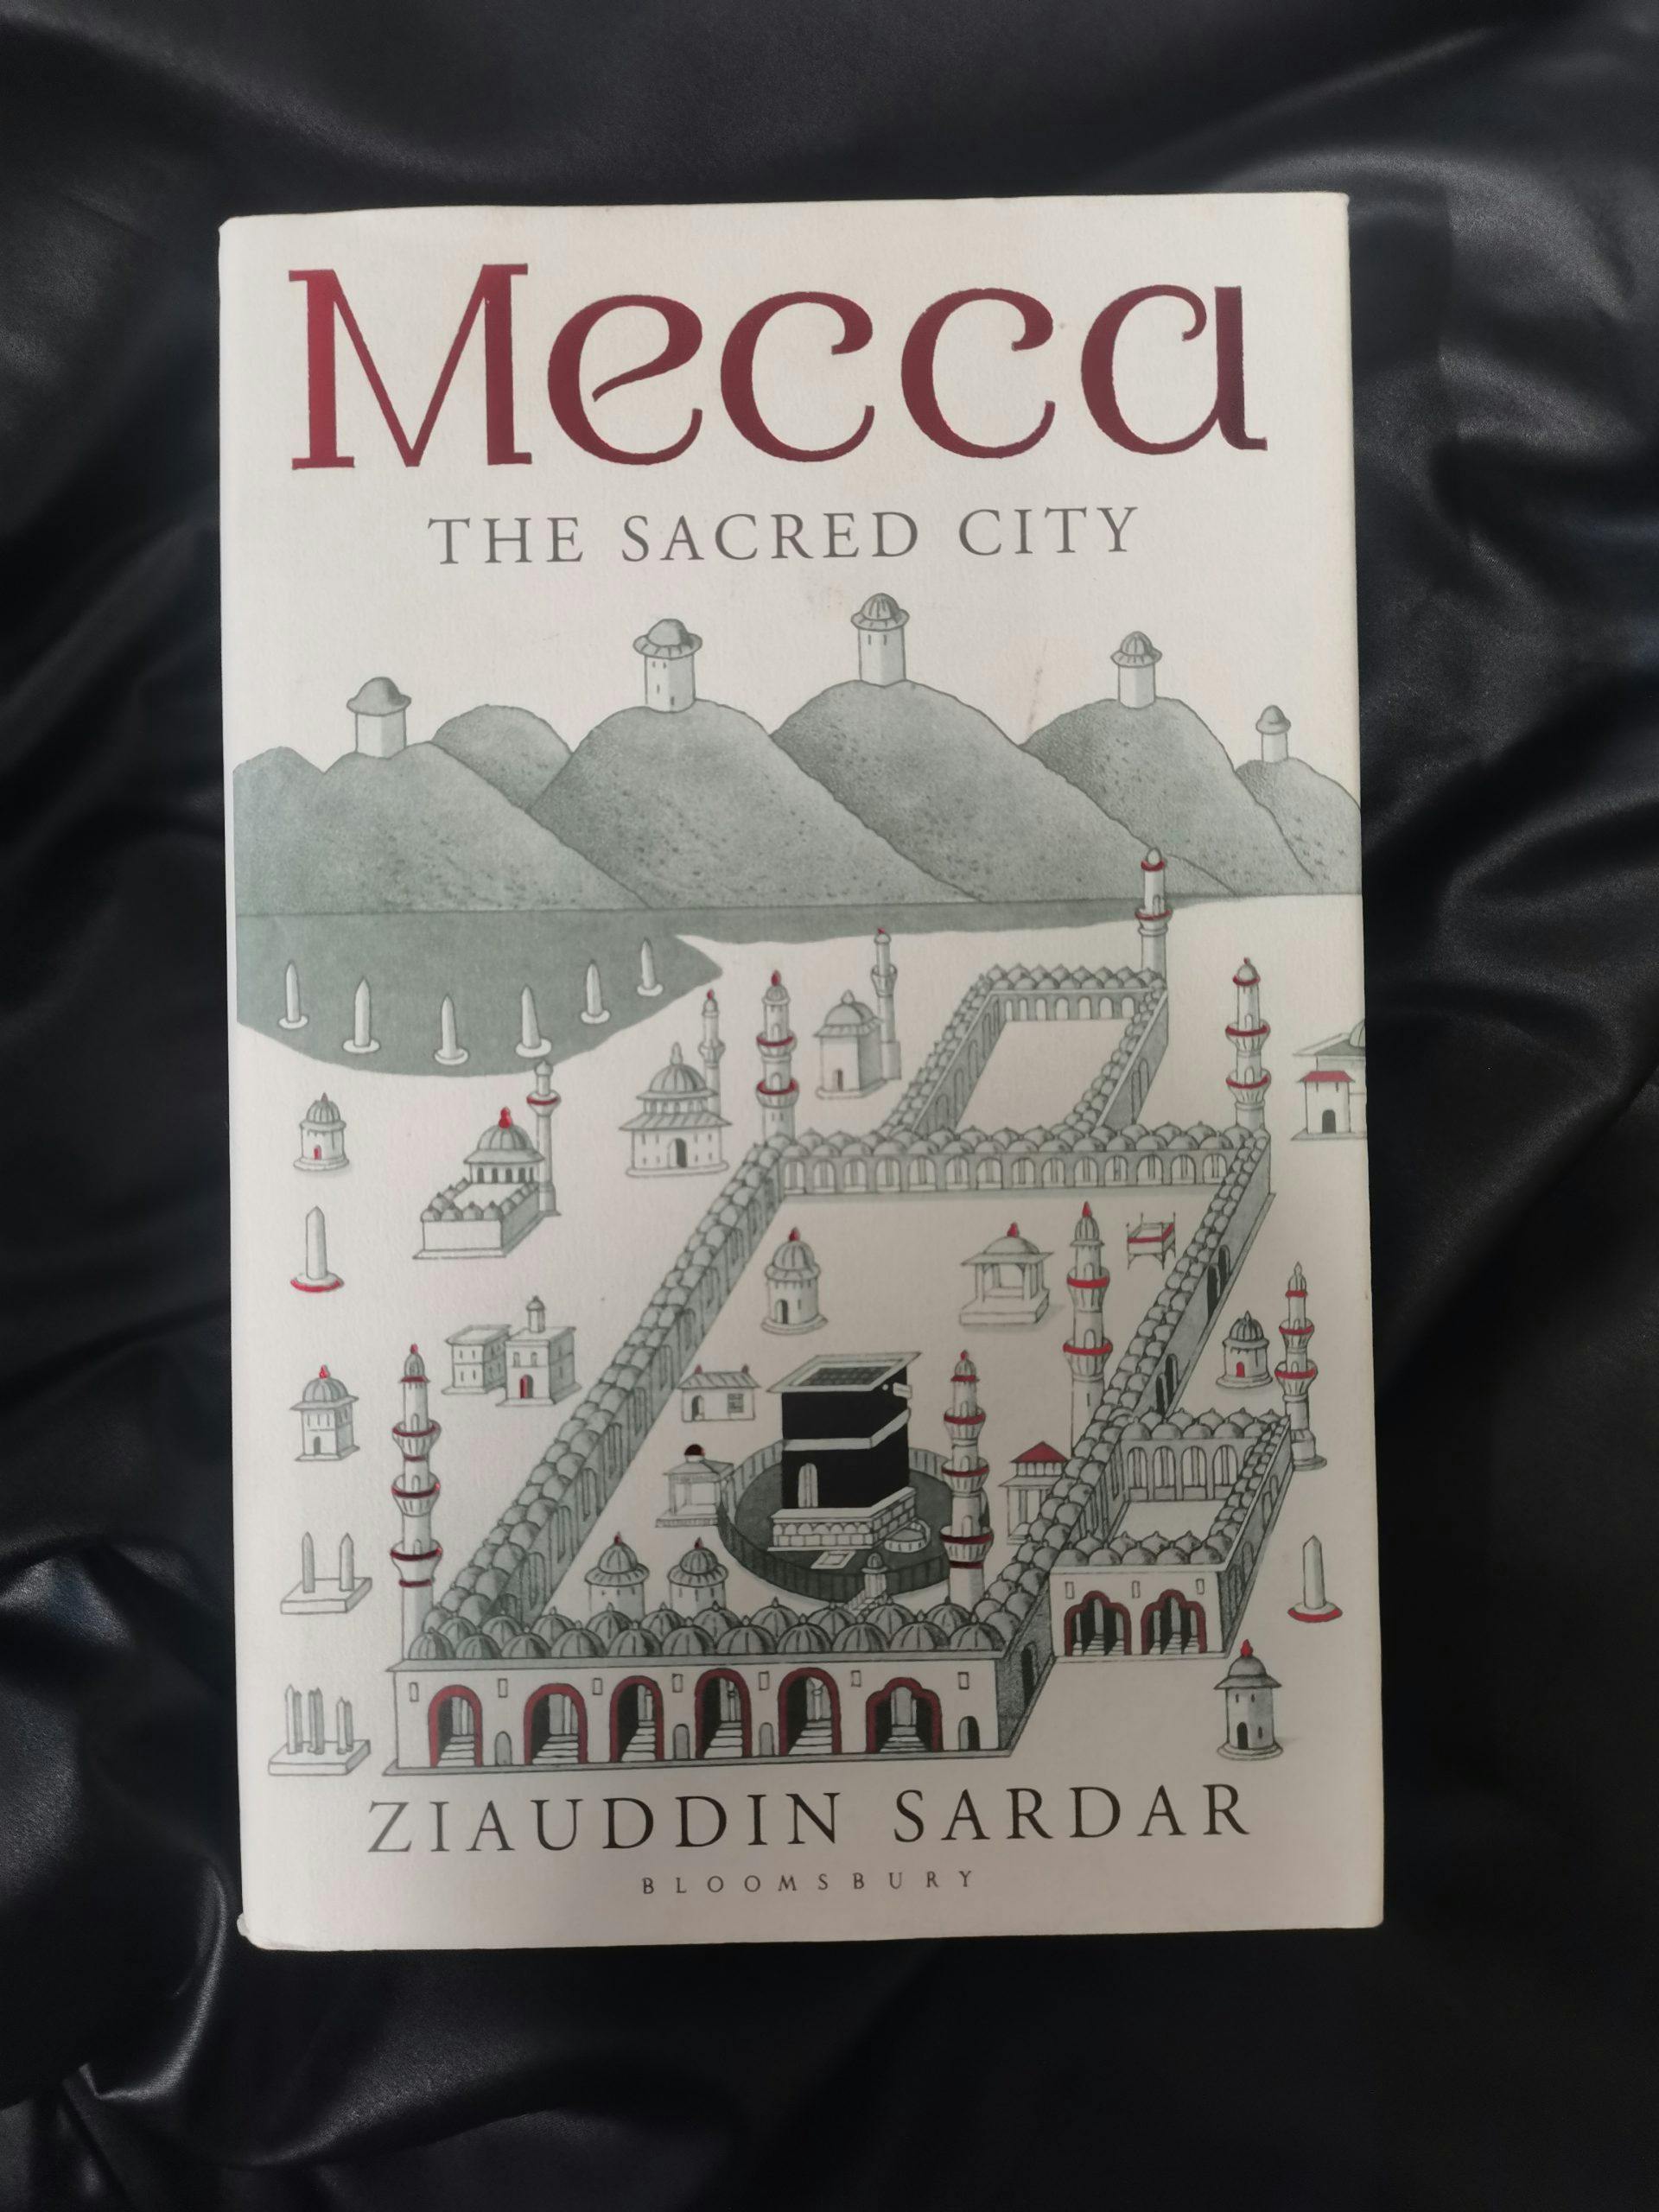 Mecca The Sacred City